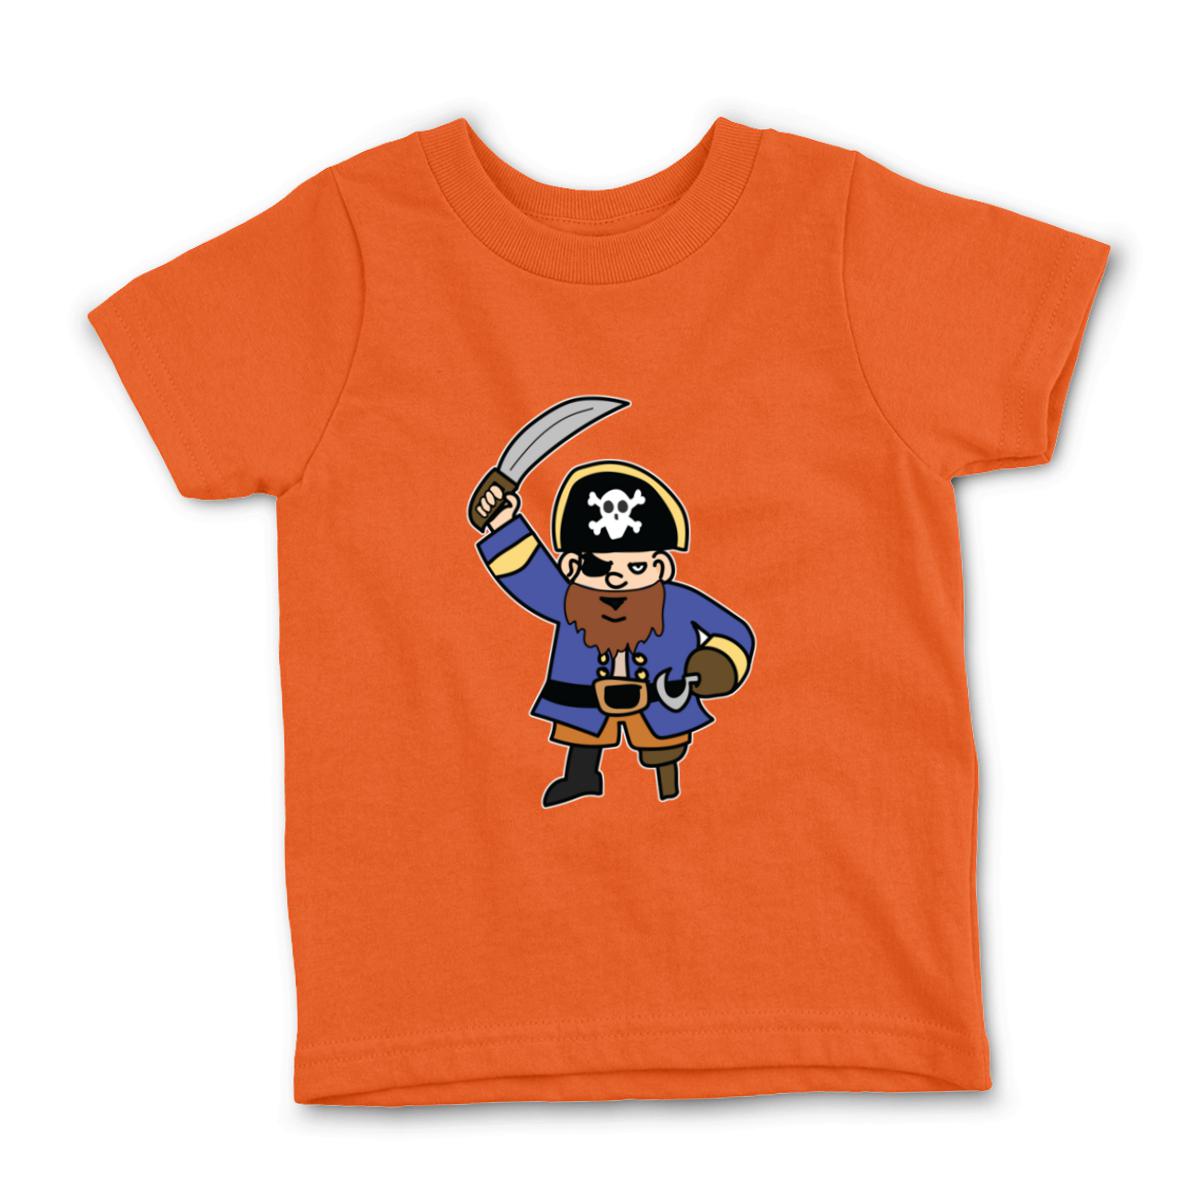 Pirate Kid's Tee Small orange